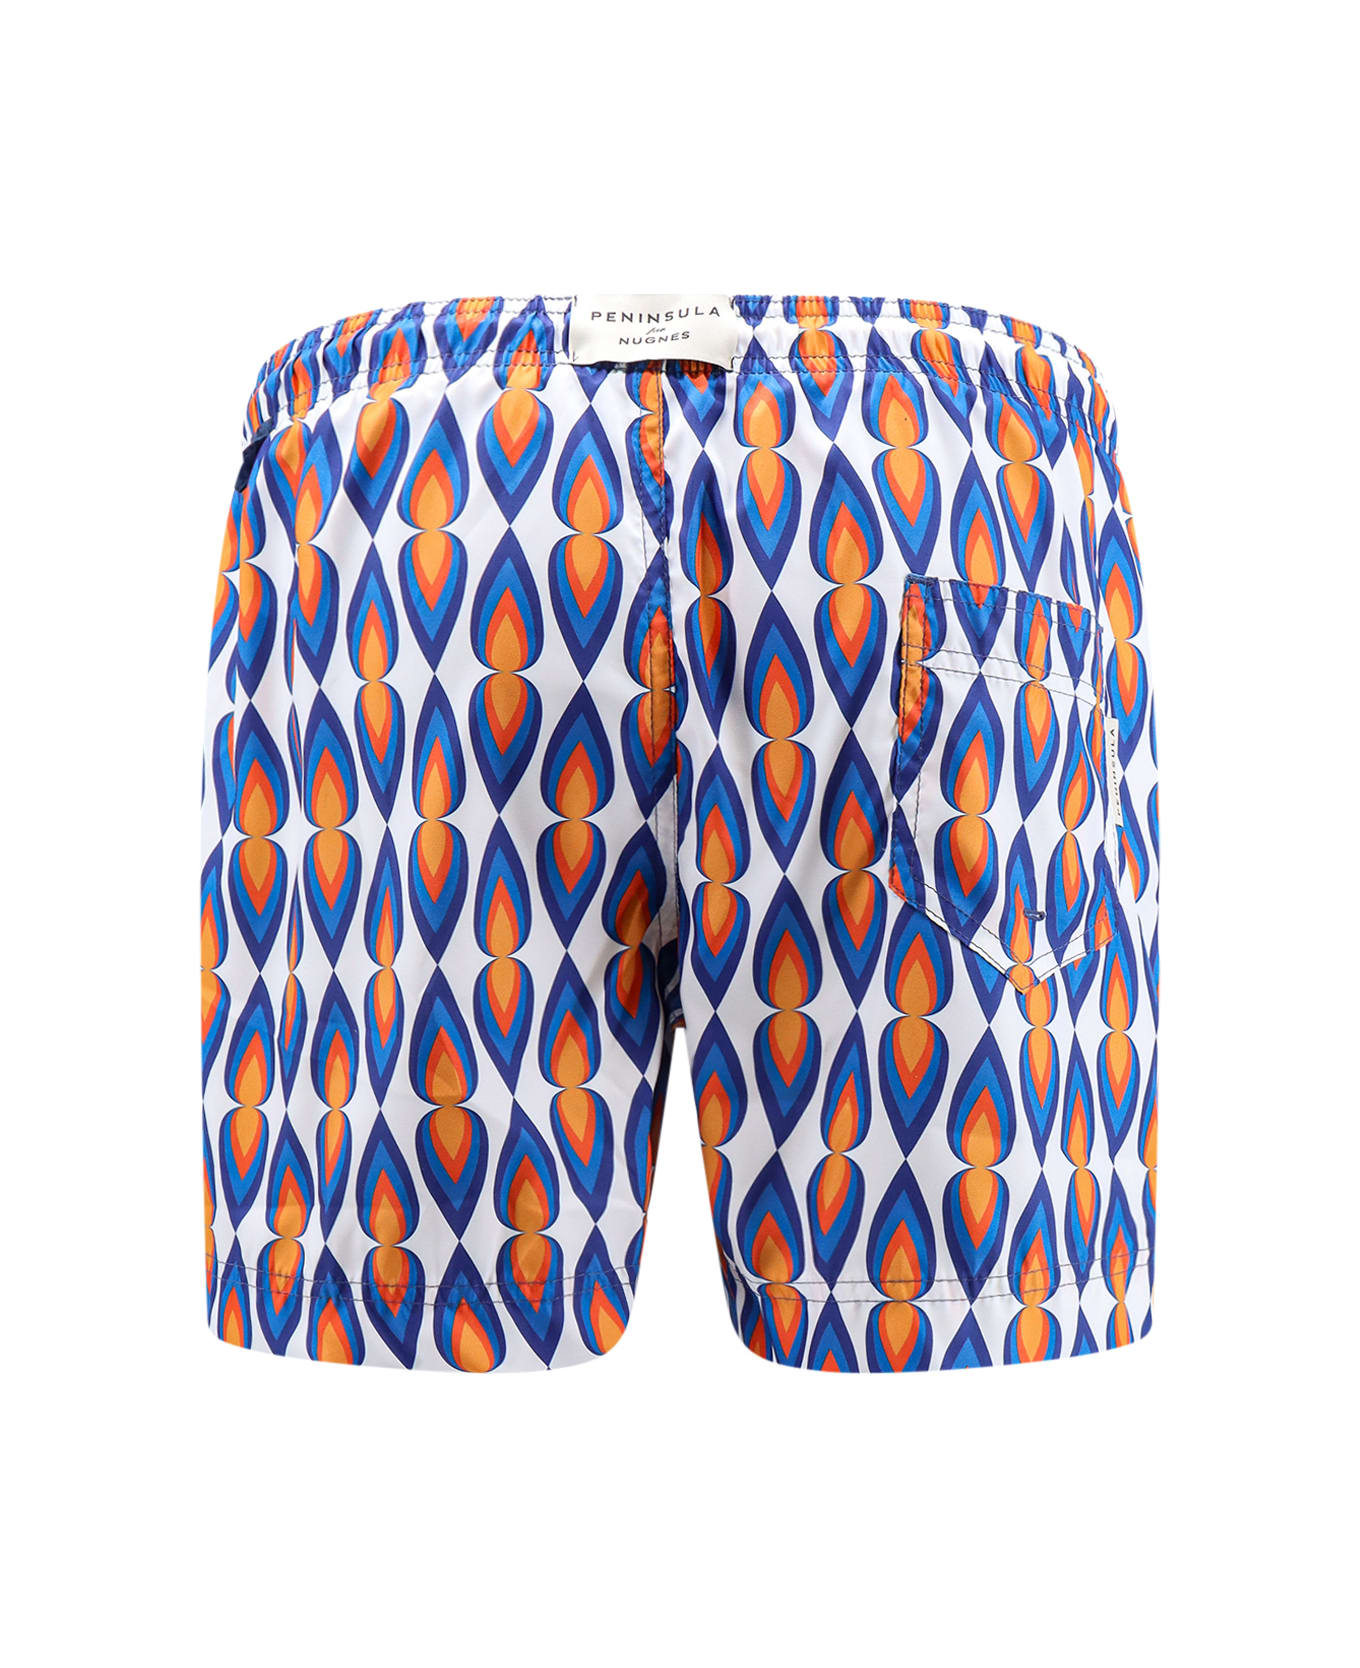 Peninsula Swimwear Swim Shorts - Multicolor